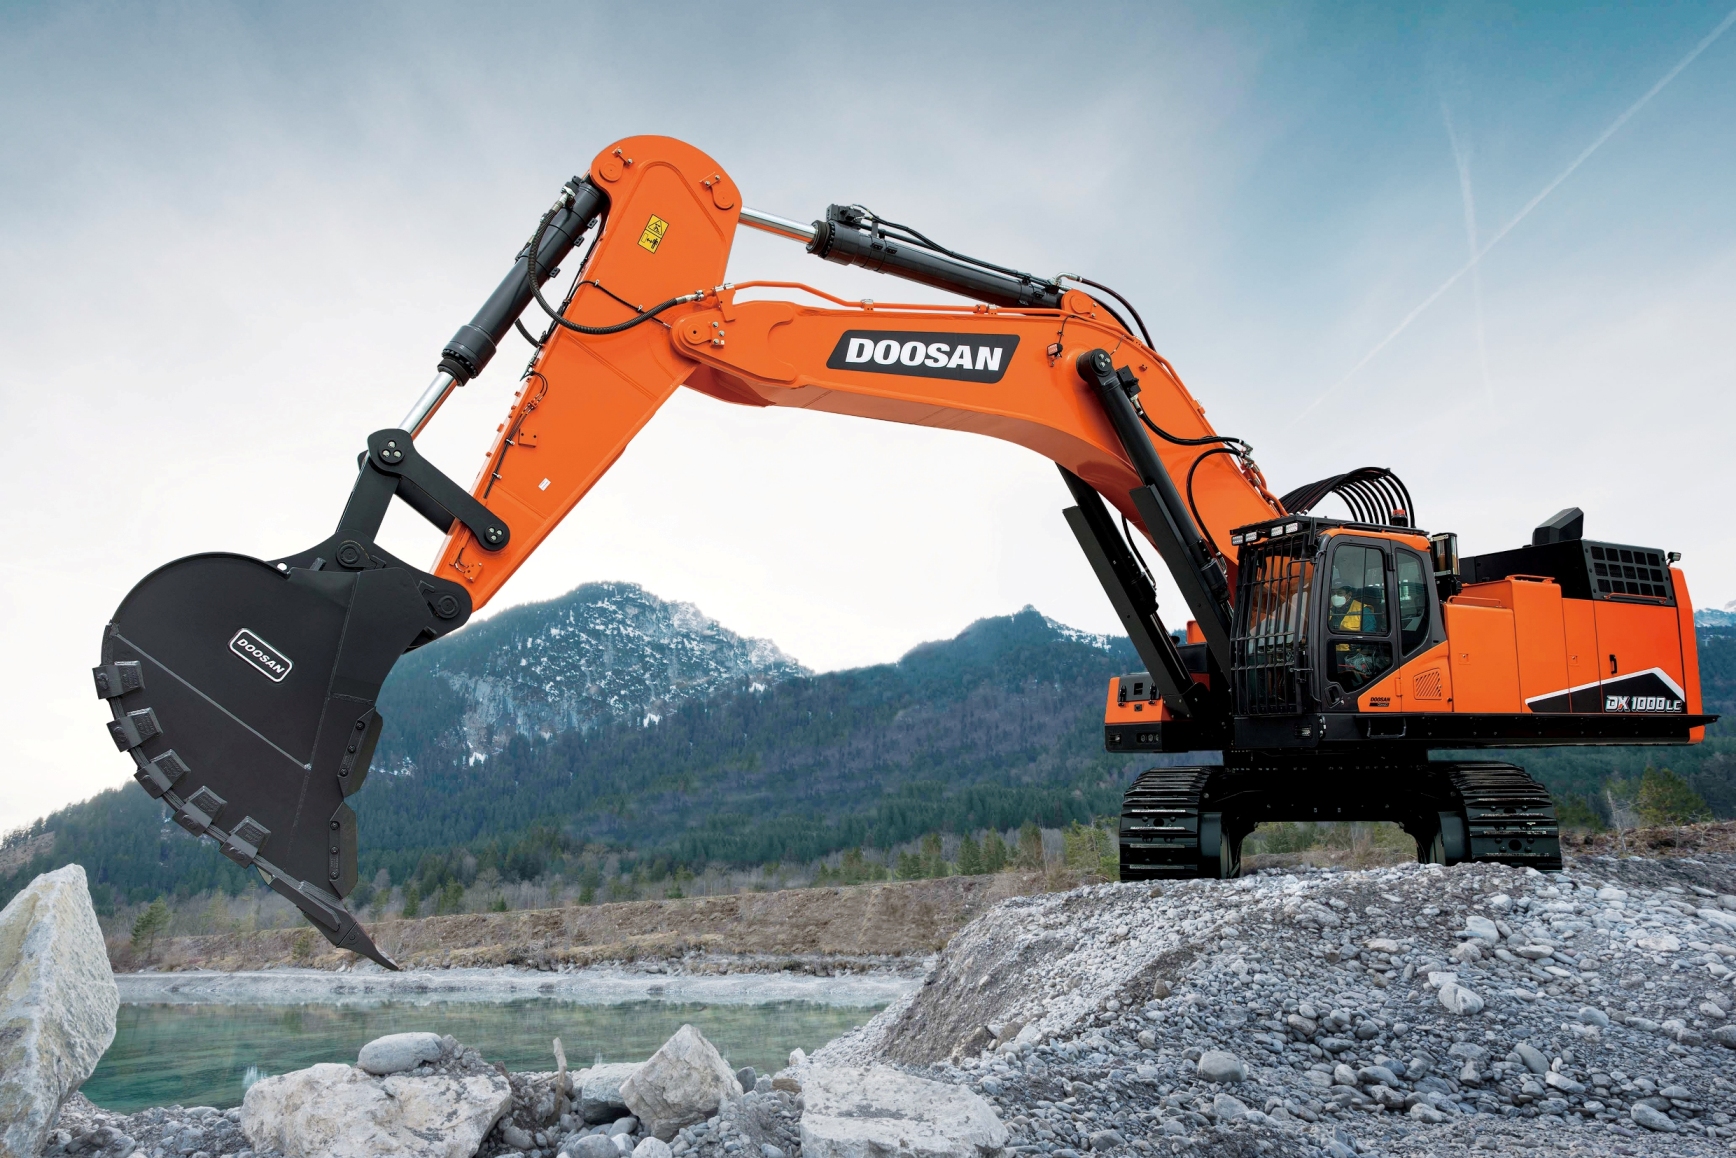 New Doosan excavator offers best performance in 100-tonne class Scottish Construction Now